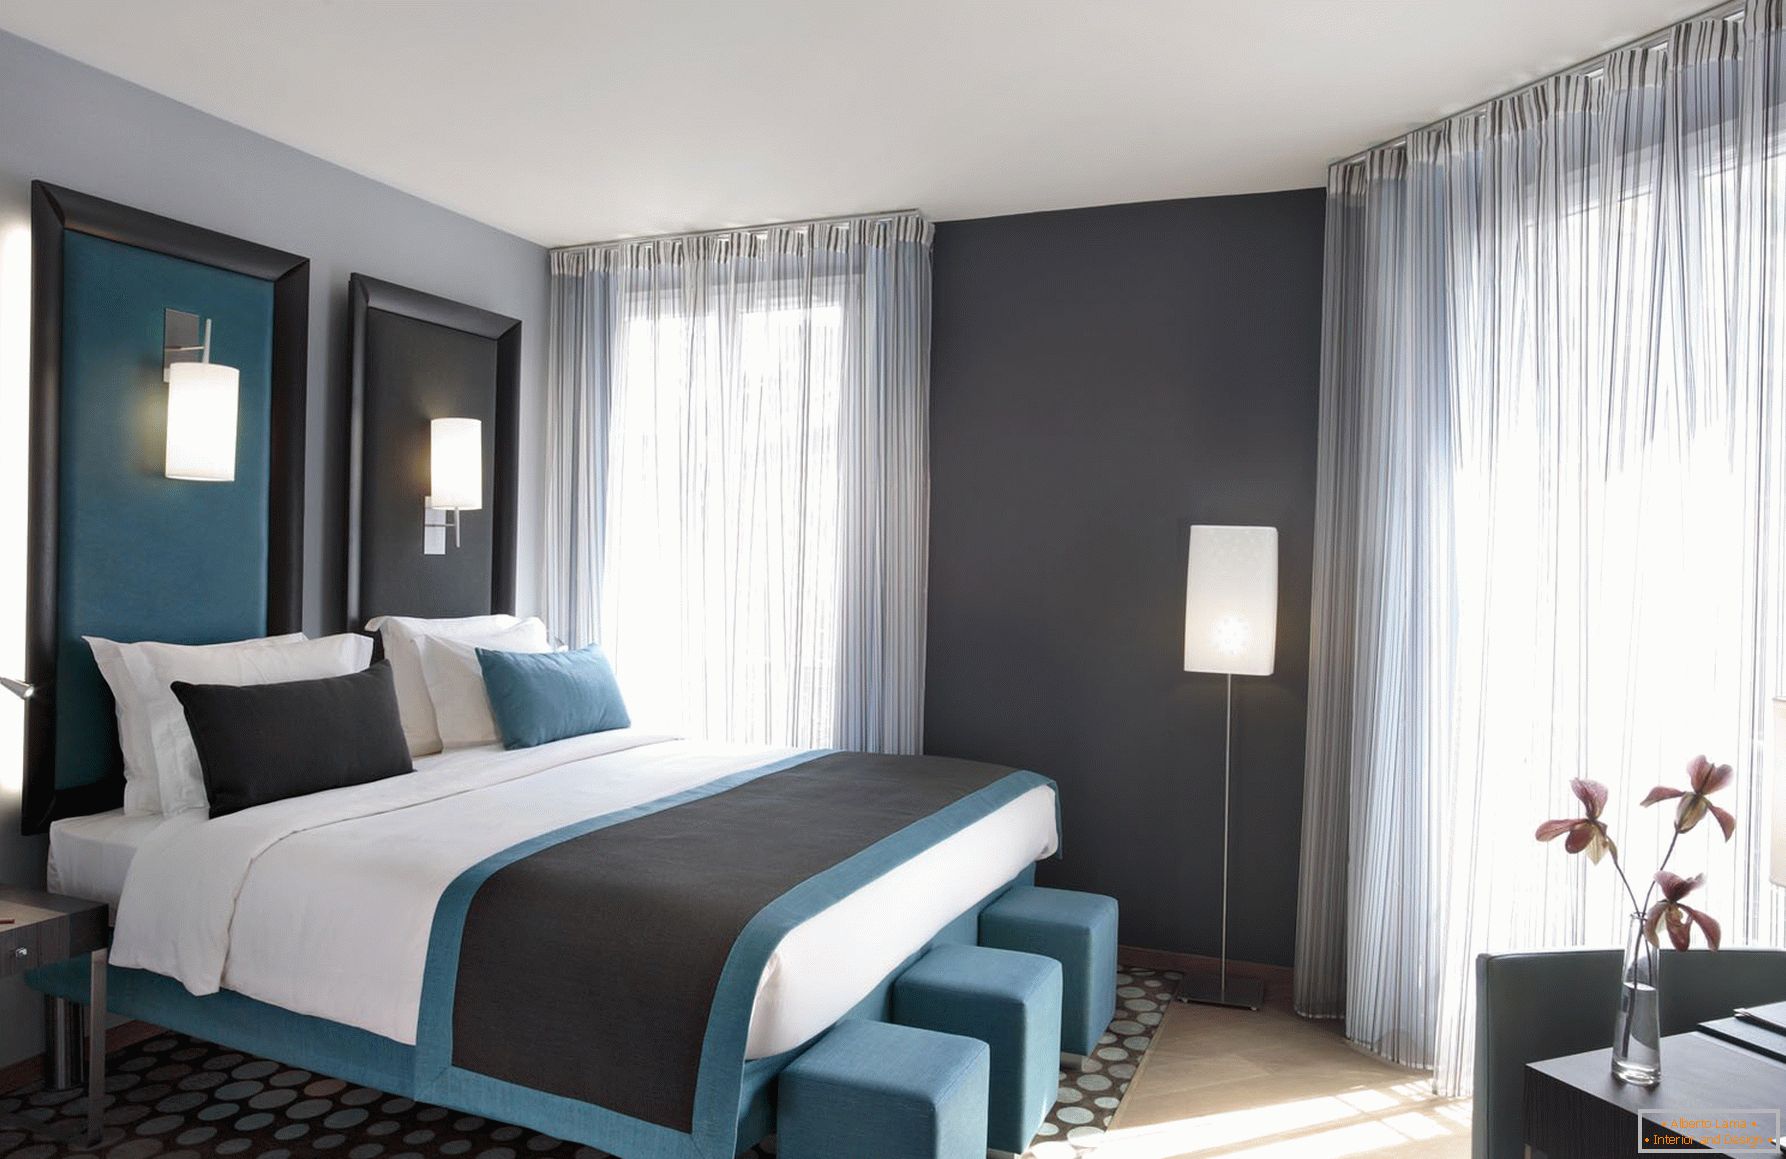 Gray-turquoise bedroom